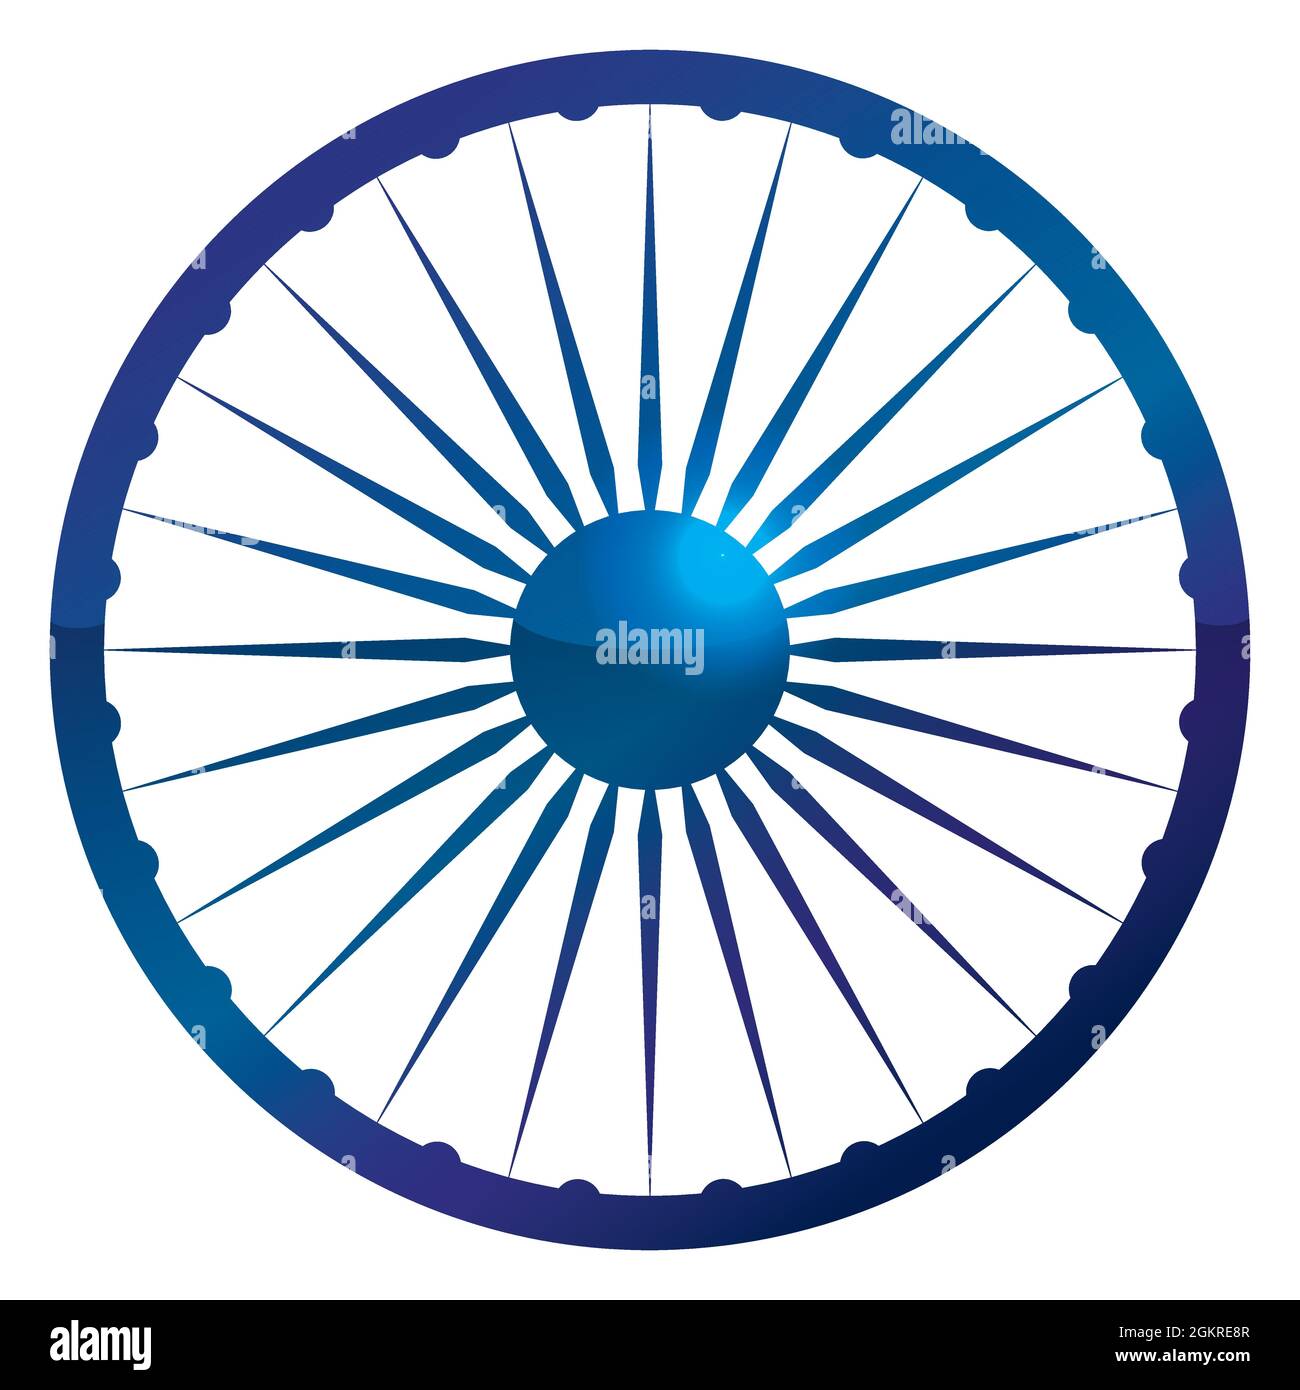 Blue and glossy Ashoka Chakra wheel symbol, isolated over white background. Stock Vector